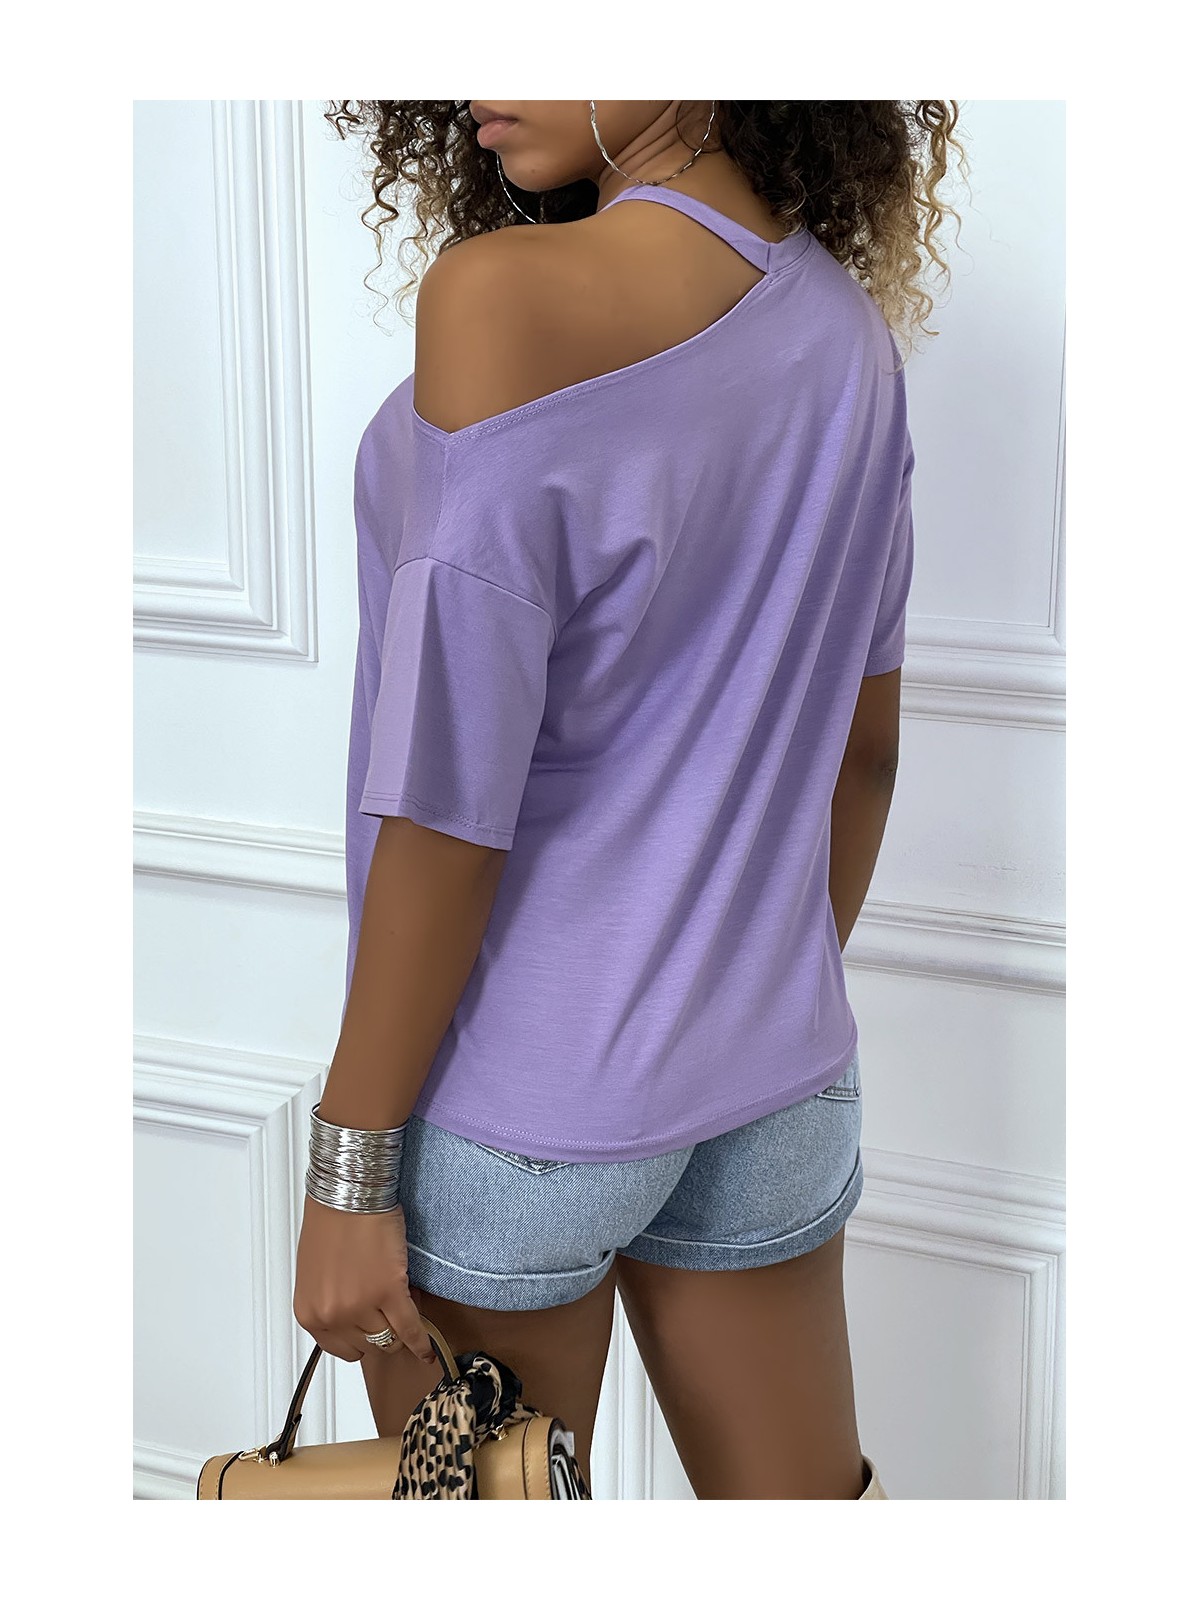 Tee-shirt lila avec epaule denudé - 6